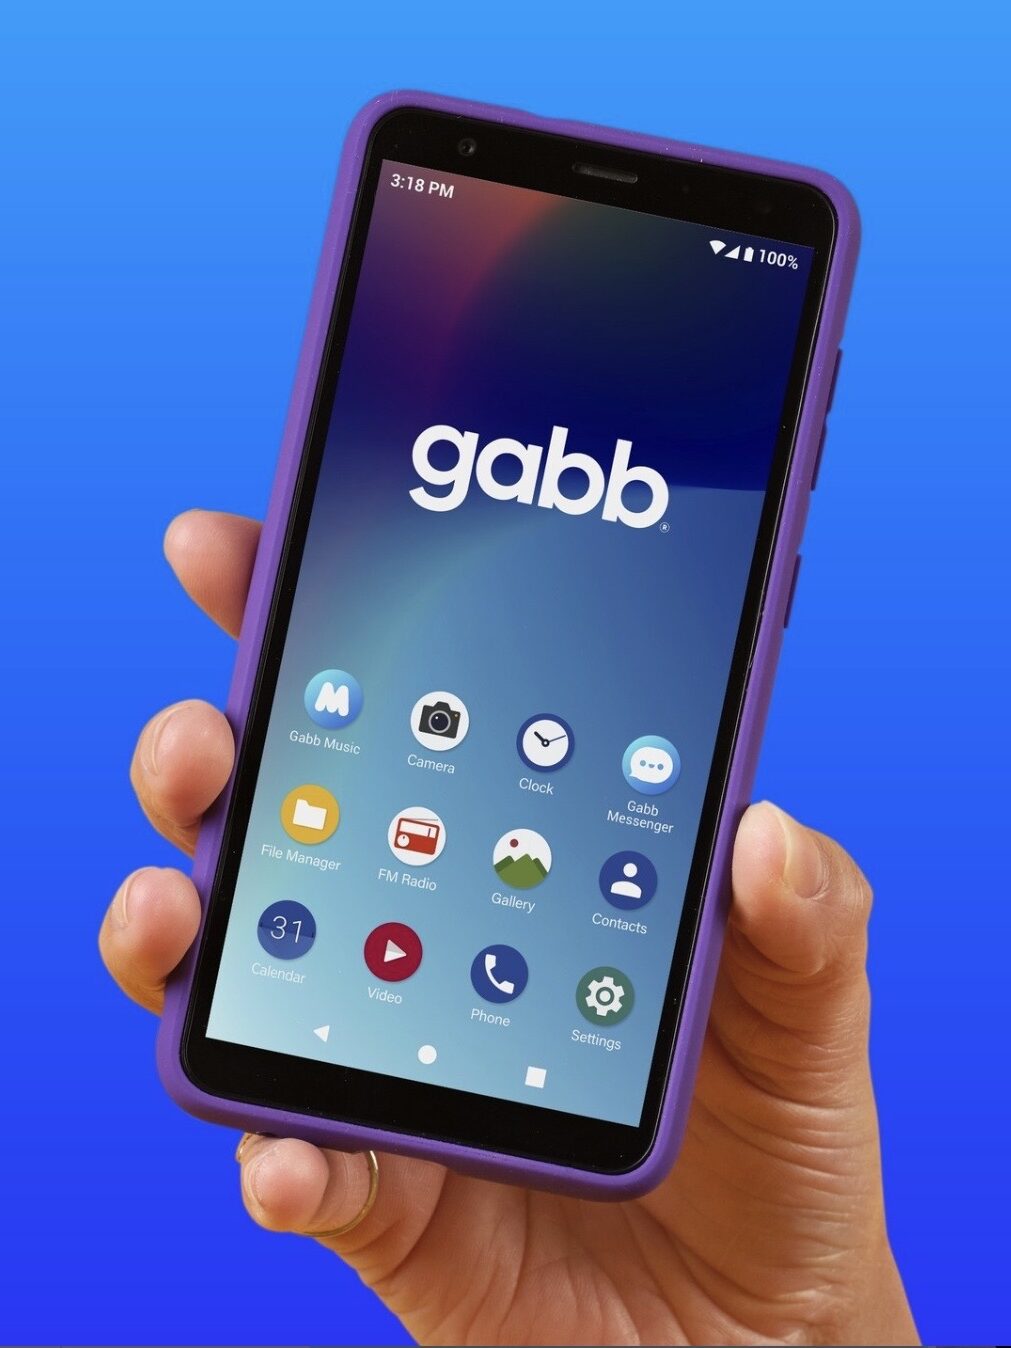 Gabb smartphone for kids